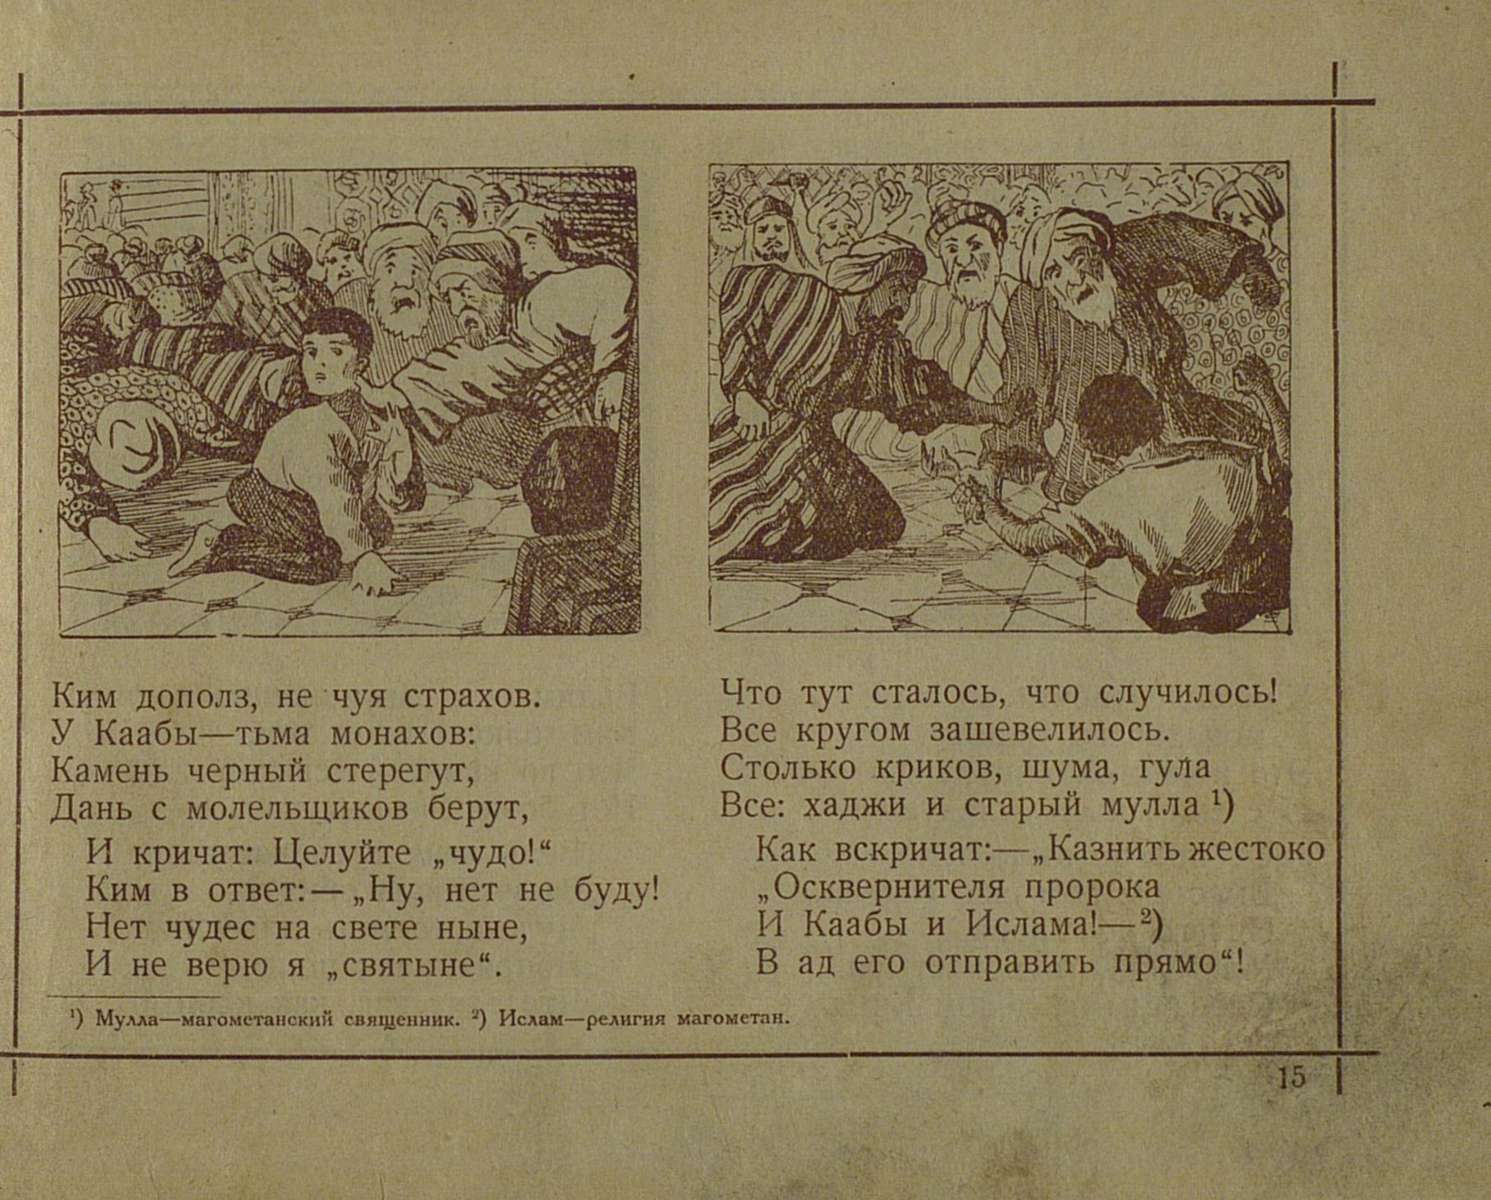 Приключения Кима. Путешествия по Азии, Харьков, 1925. 19.jpg